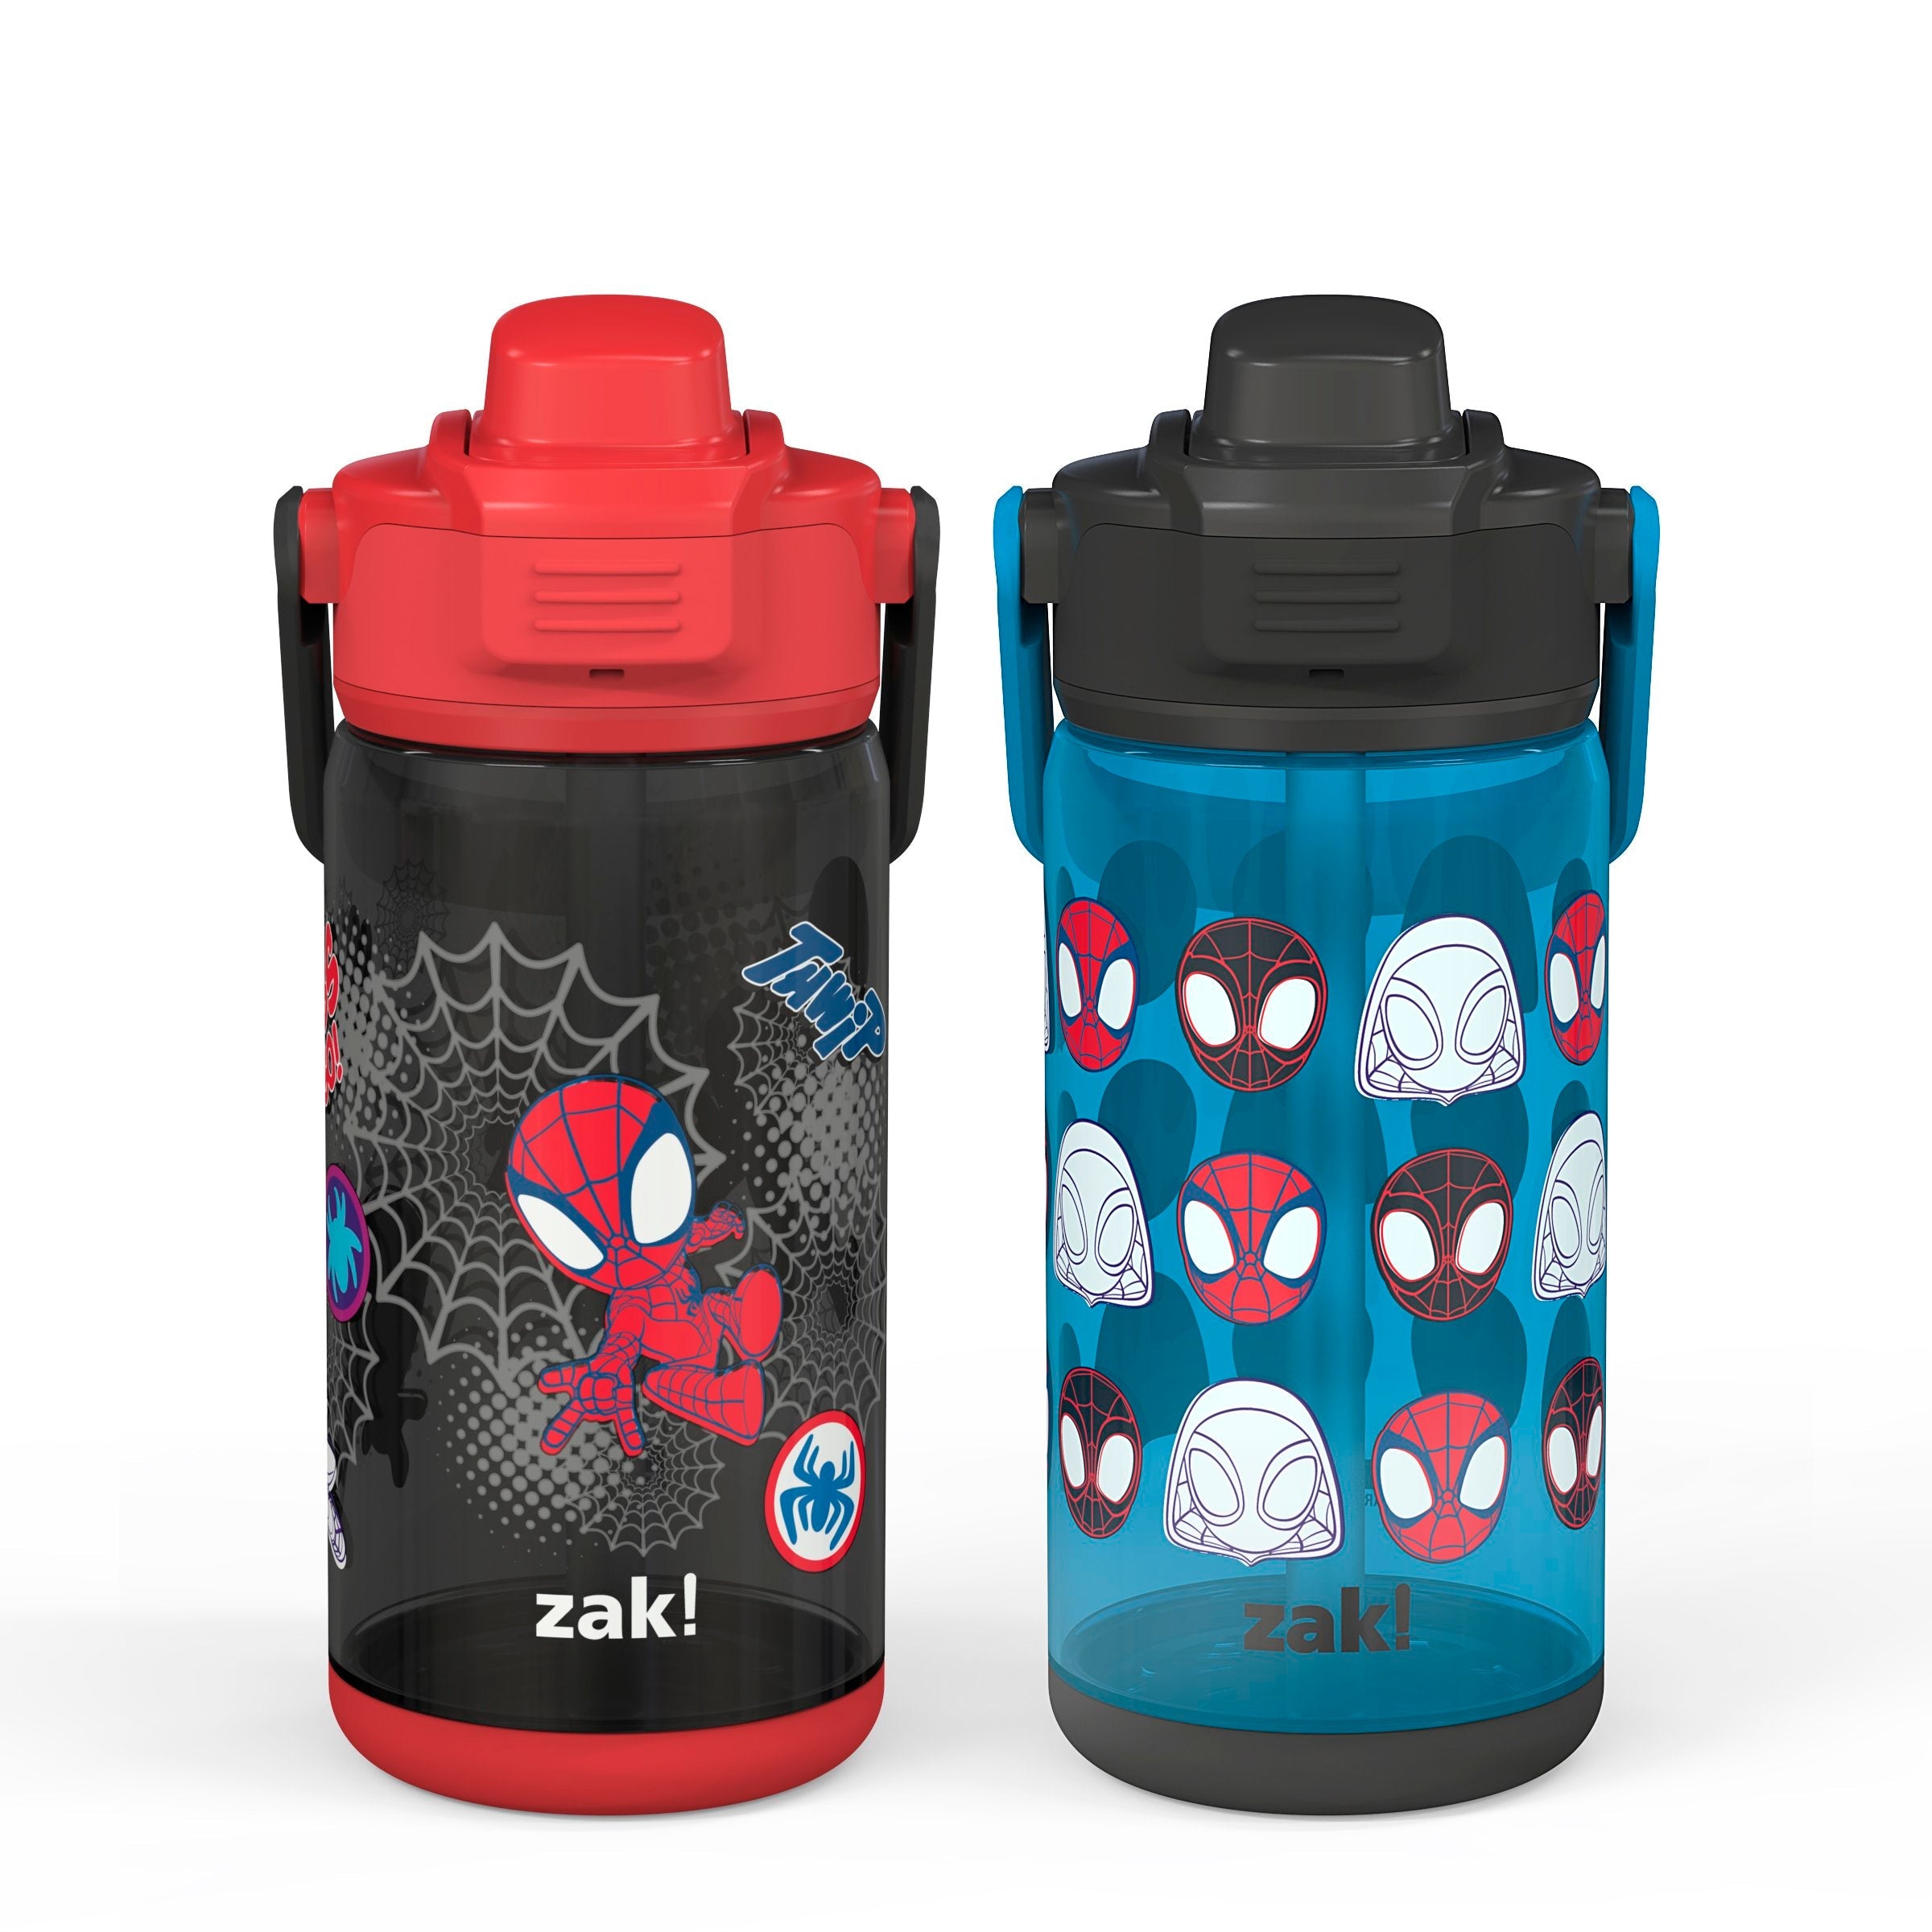 Zak Designs Marvel Spider-Man Kelso Toddler Cups For Travel or At